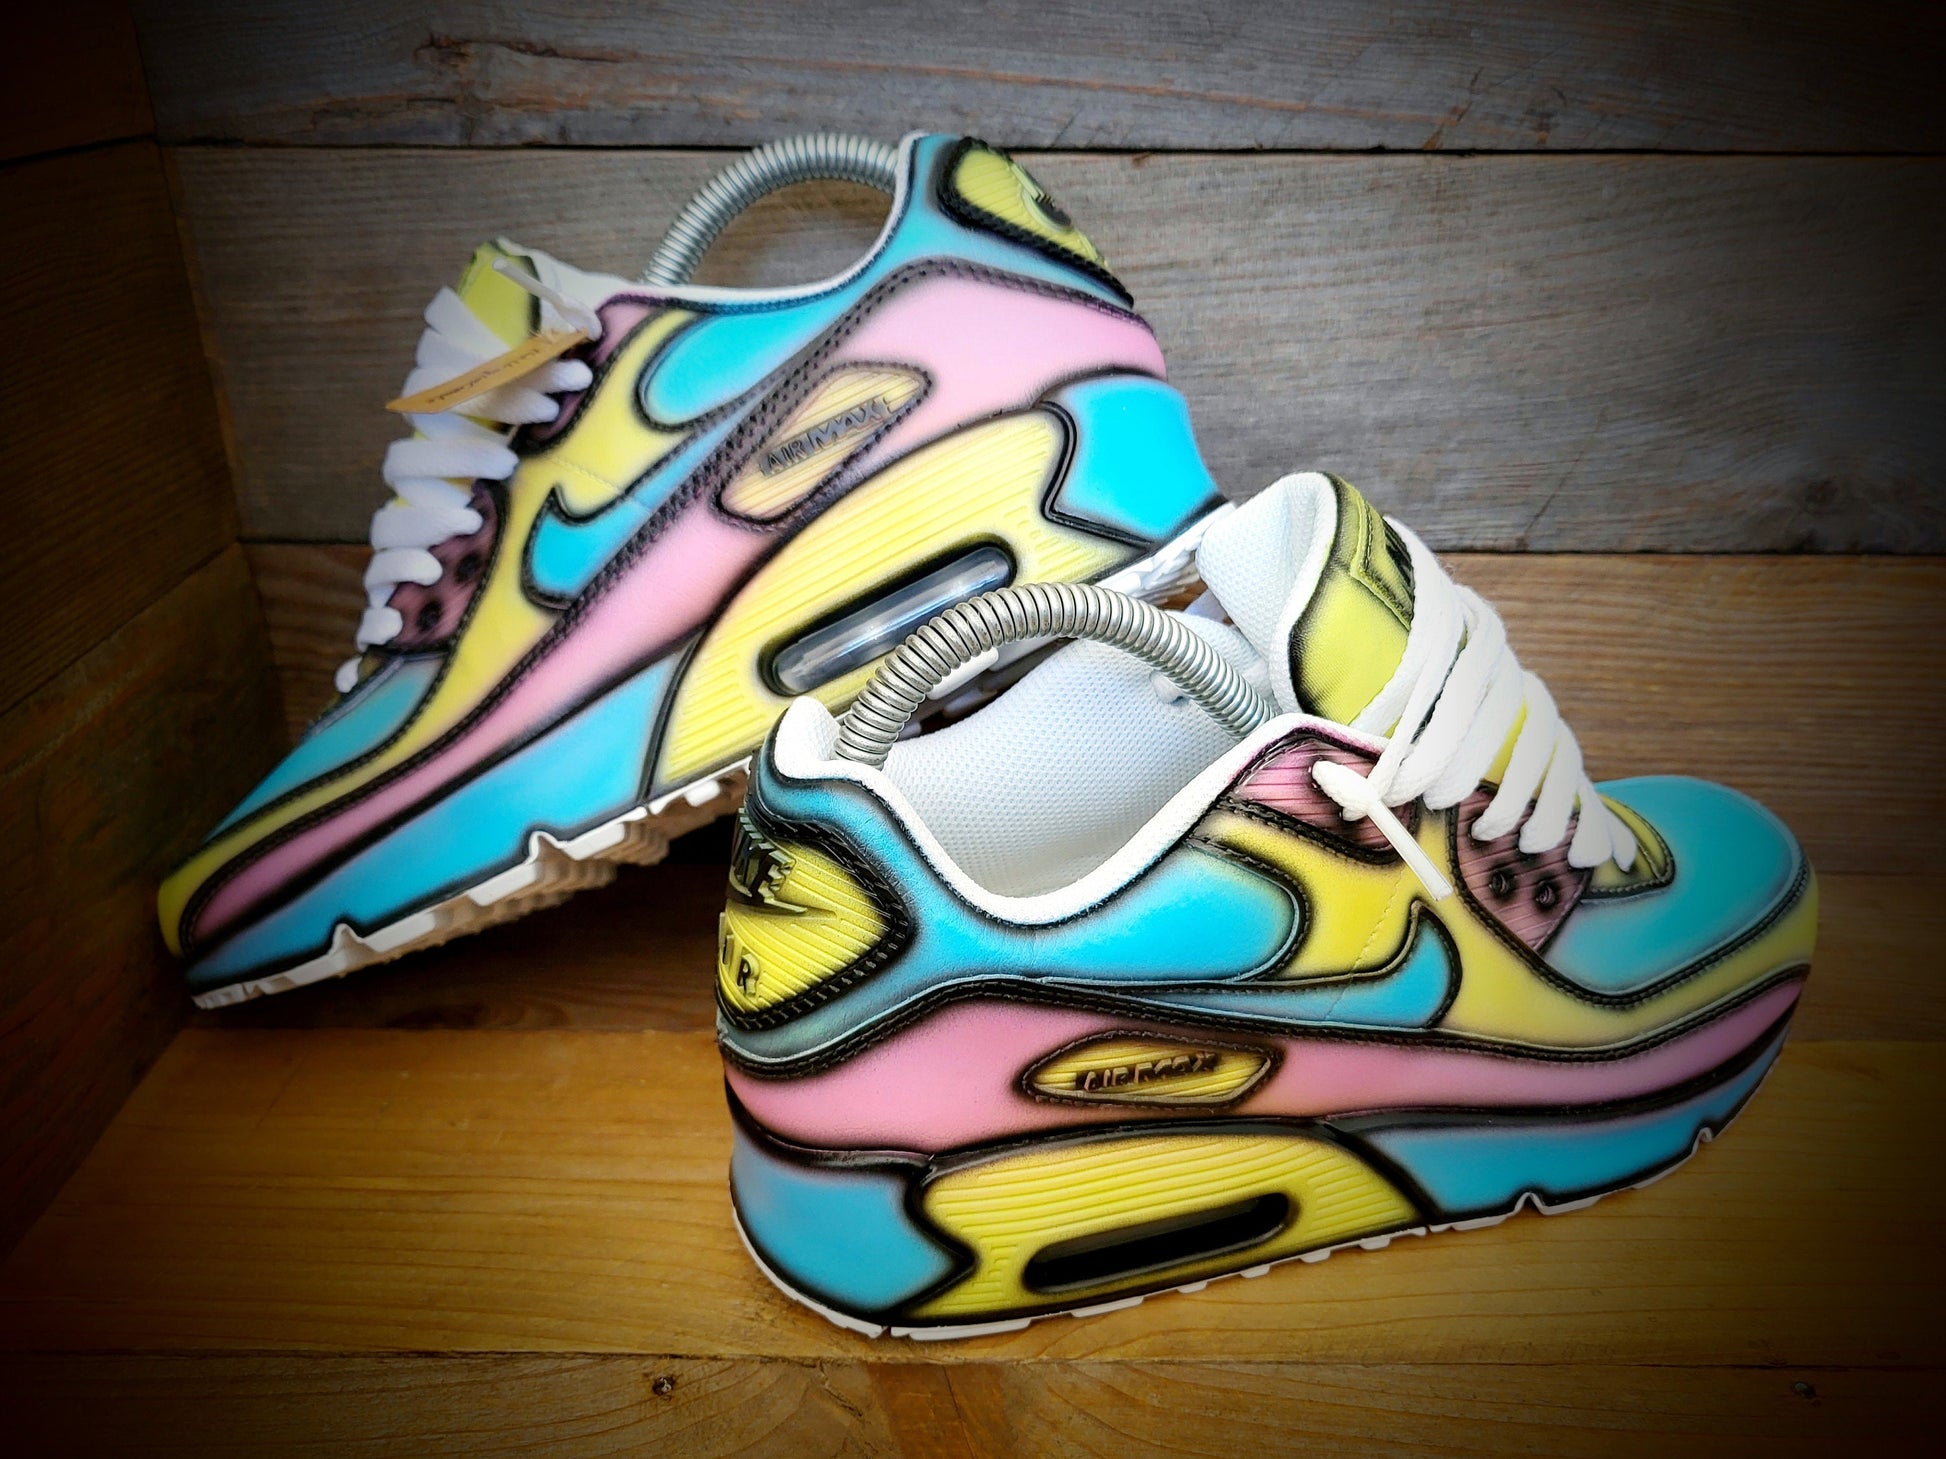 Custom Painted Air Max 90/Sneakers/Shoes/Kicks/Premium/Personalised/Funky Cartoon